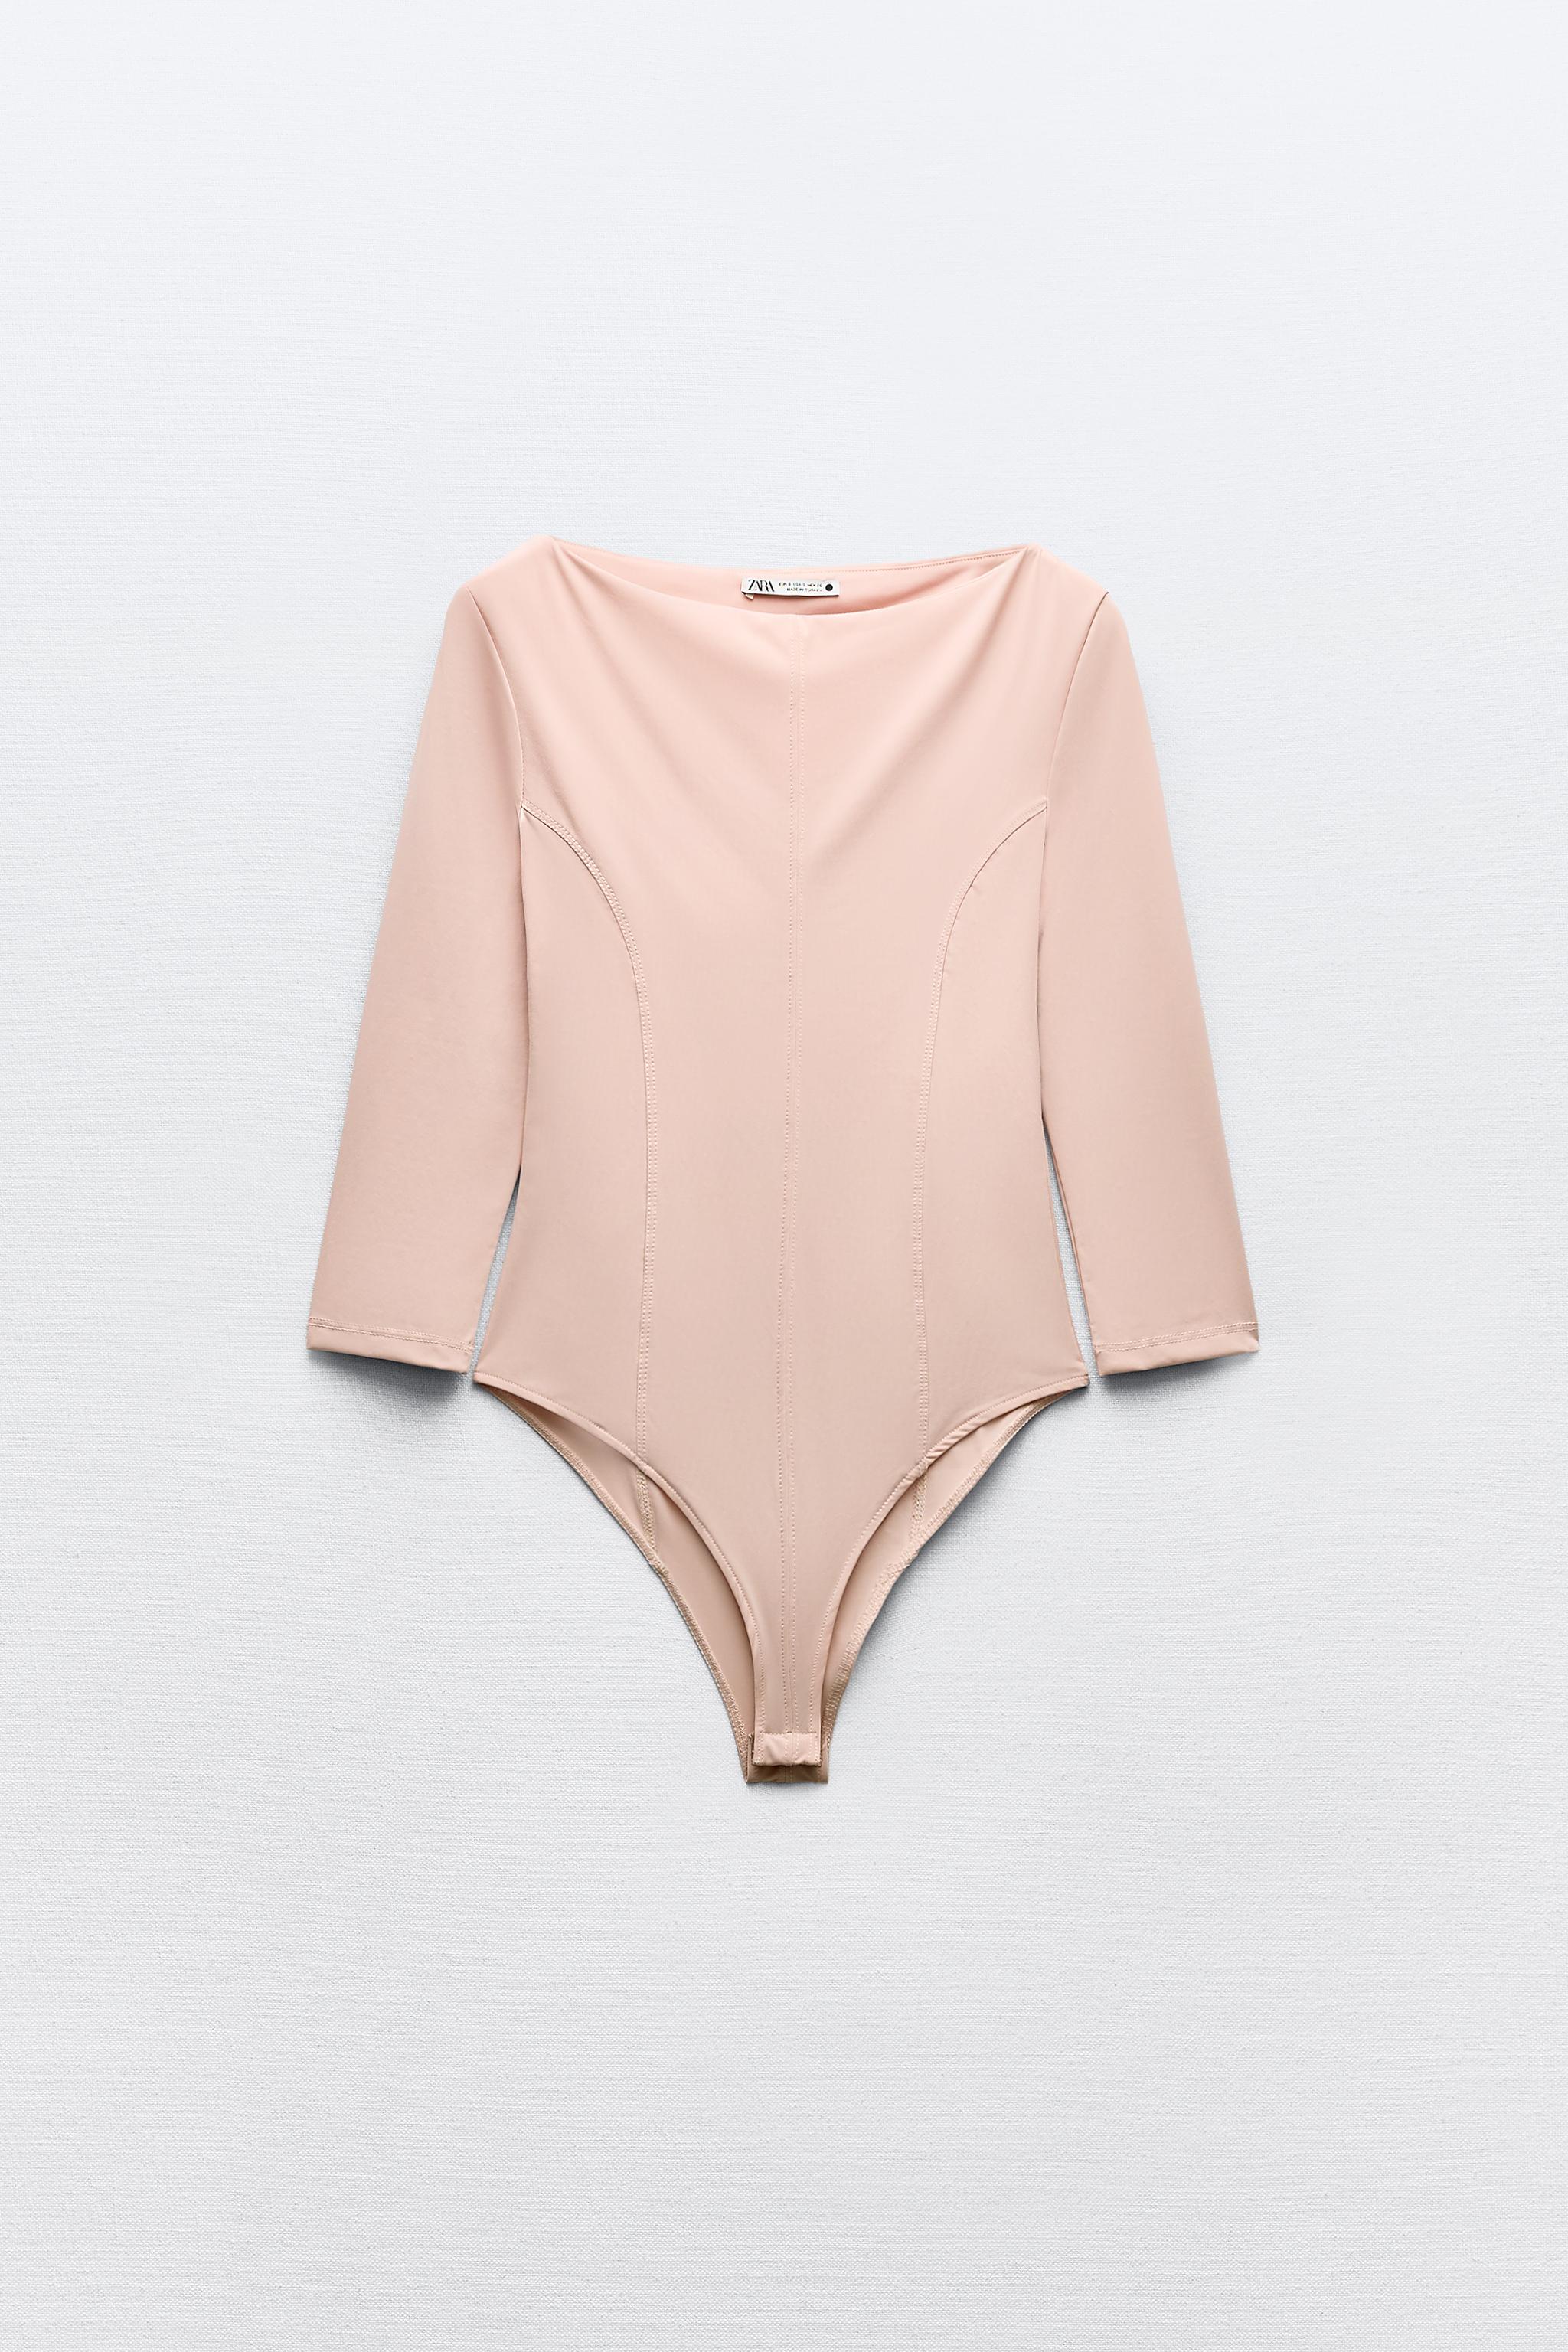 Zara, Tops, Nwt Zara Pale Pink Wired Sweetheart Neckline Bodysuit Size S